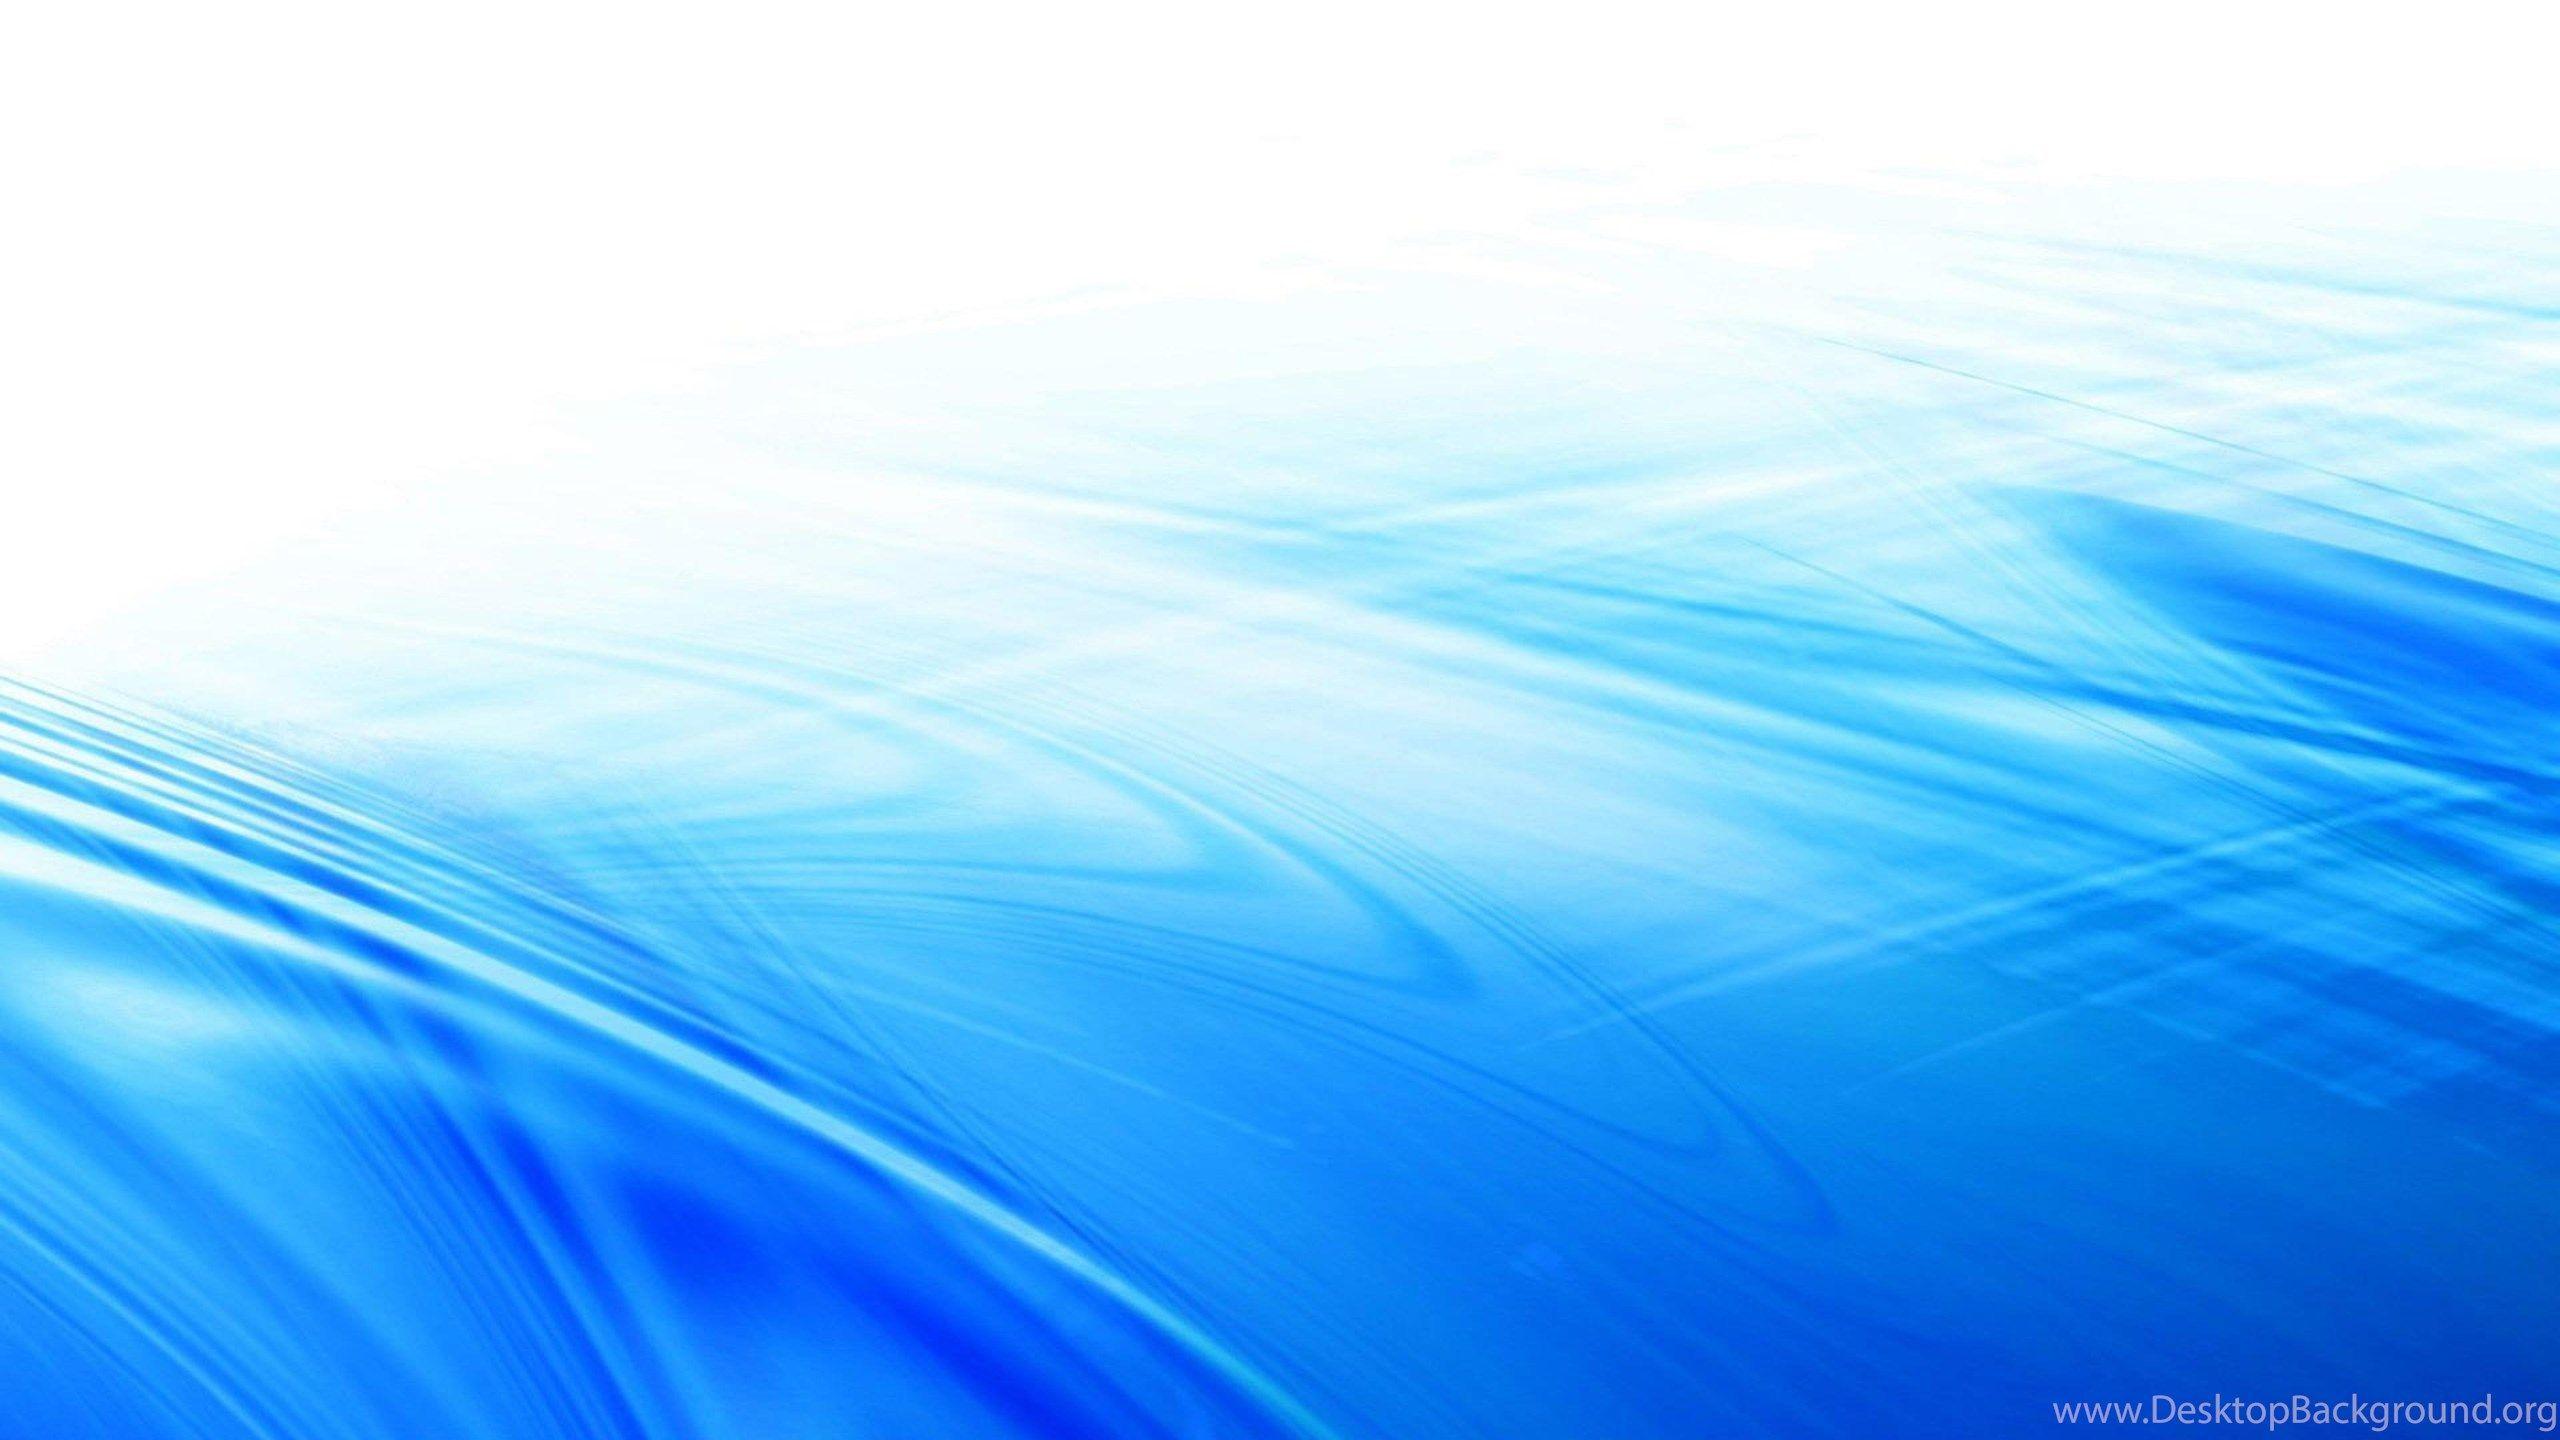 Free download 750x1334 Ocean waves blue sea waves wallpaper Ocean waves  750x1334 for your Desktop Mobile  Tablet  Explore 33 Blue Ocean Waves  HD Wallpapers  Blue Ocean Wallpaper Ocean Blue